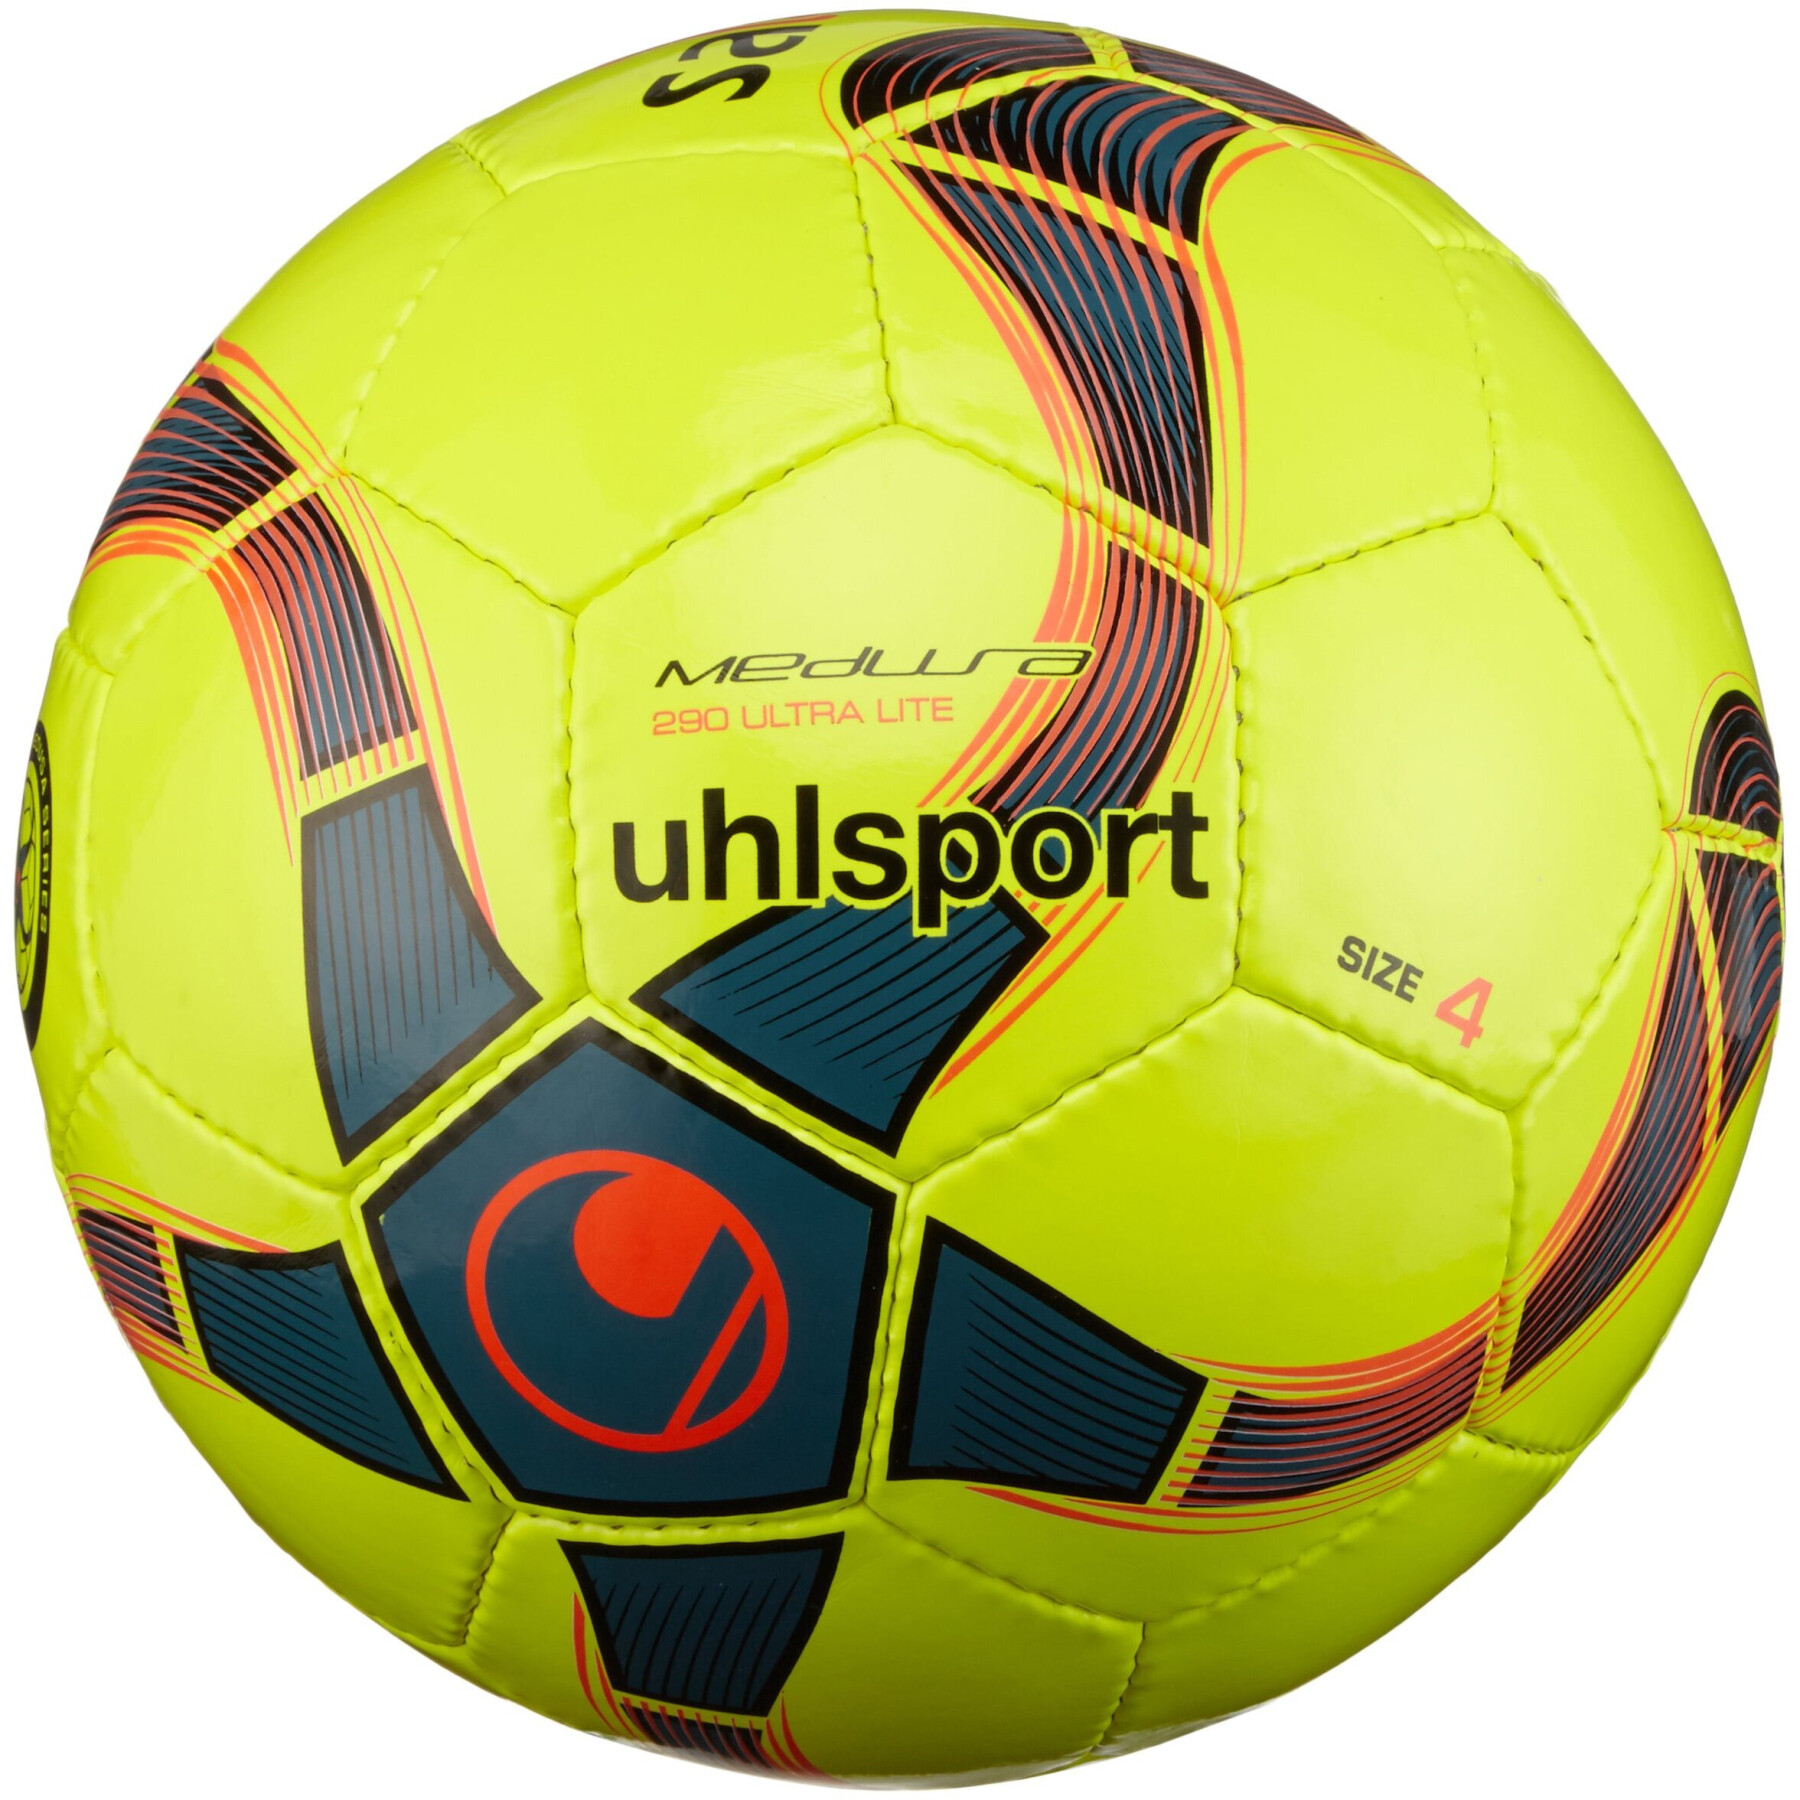 Balão Uhlsport Futsal Anteo 290 Ultra Lite